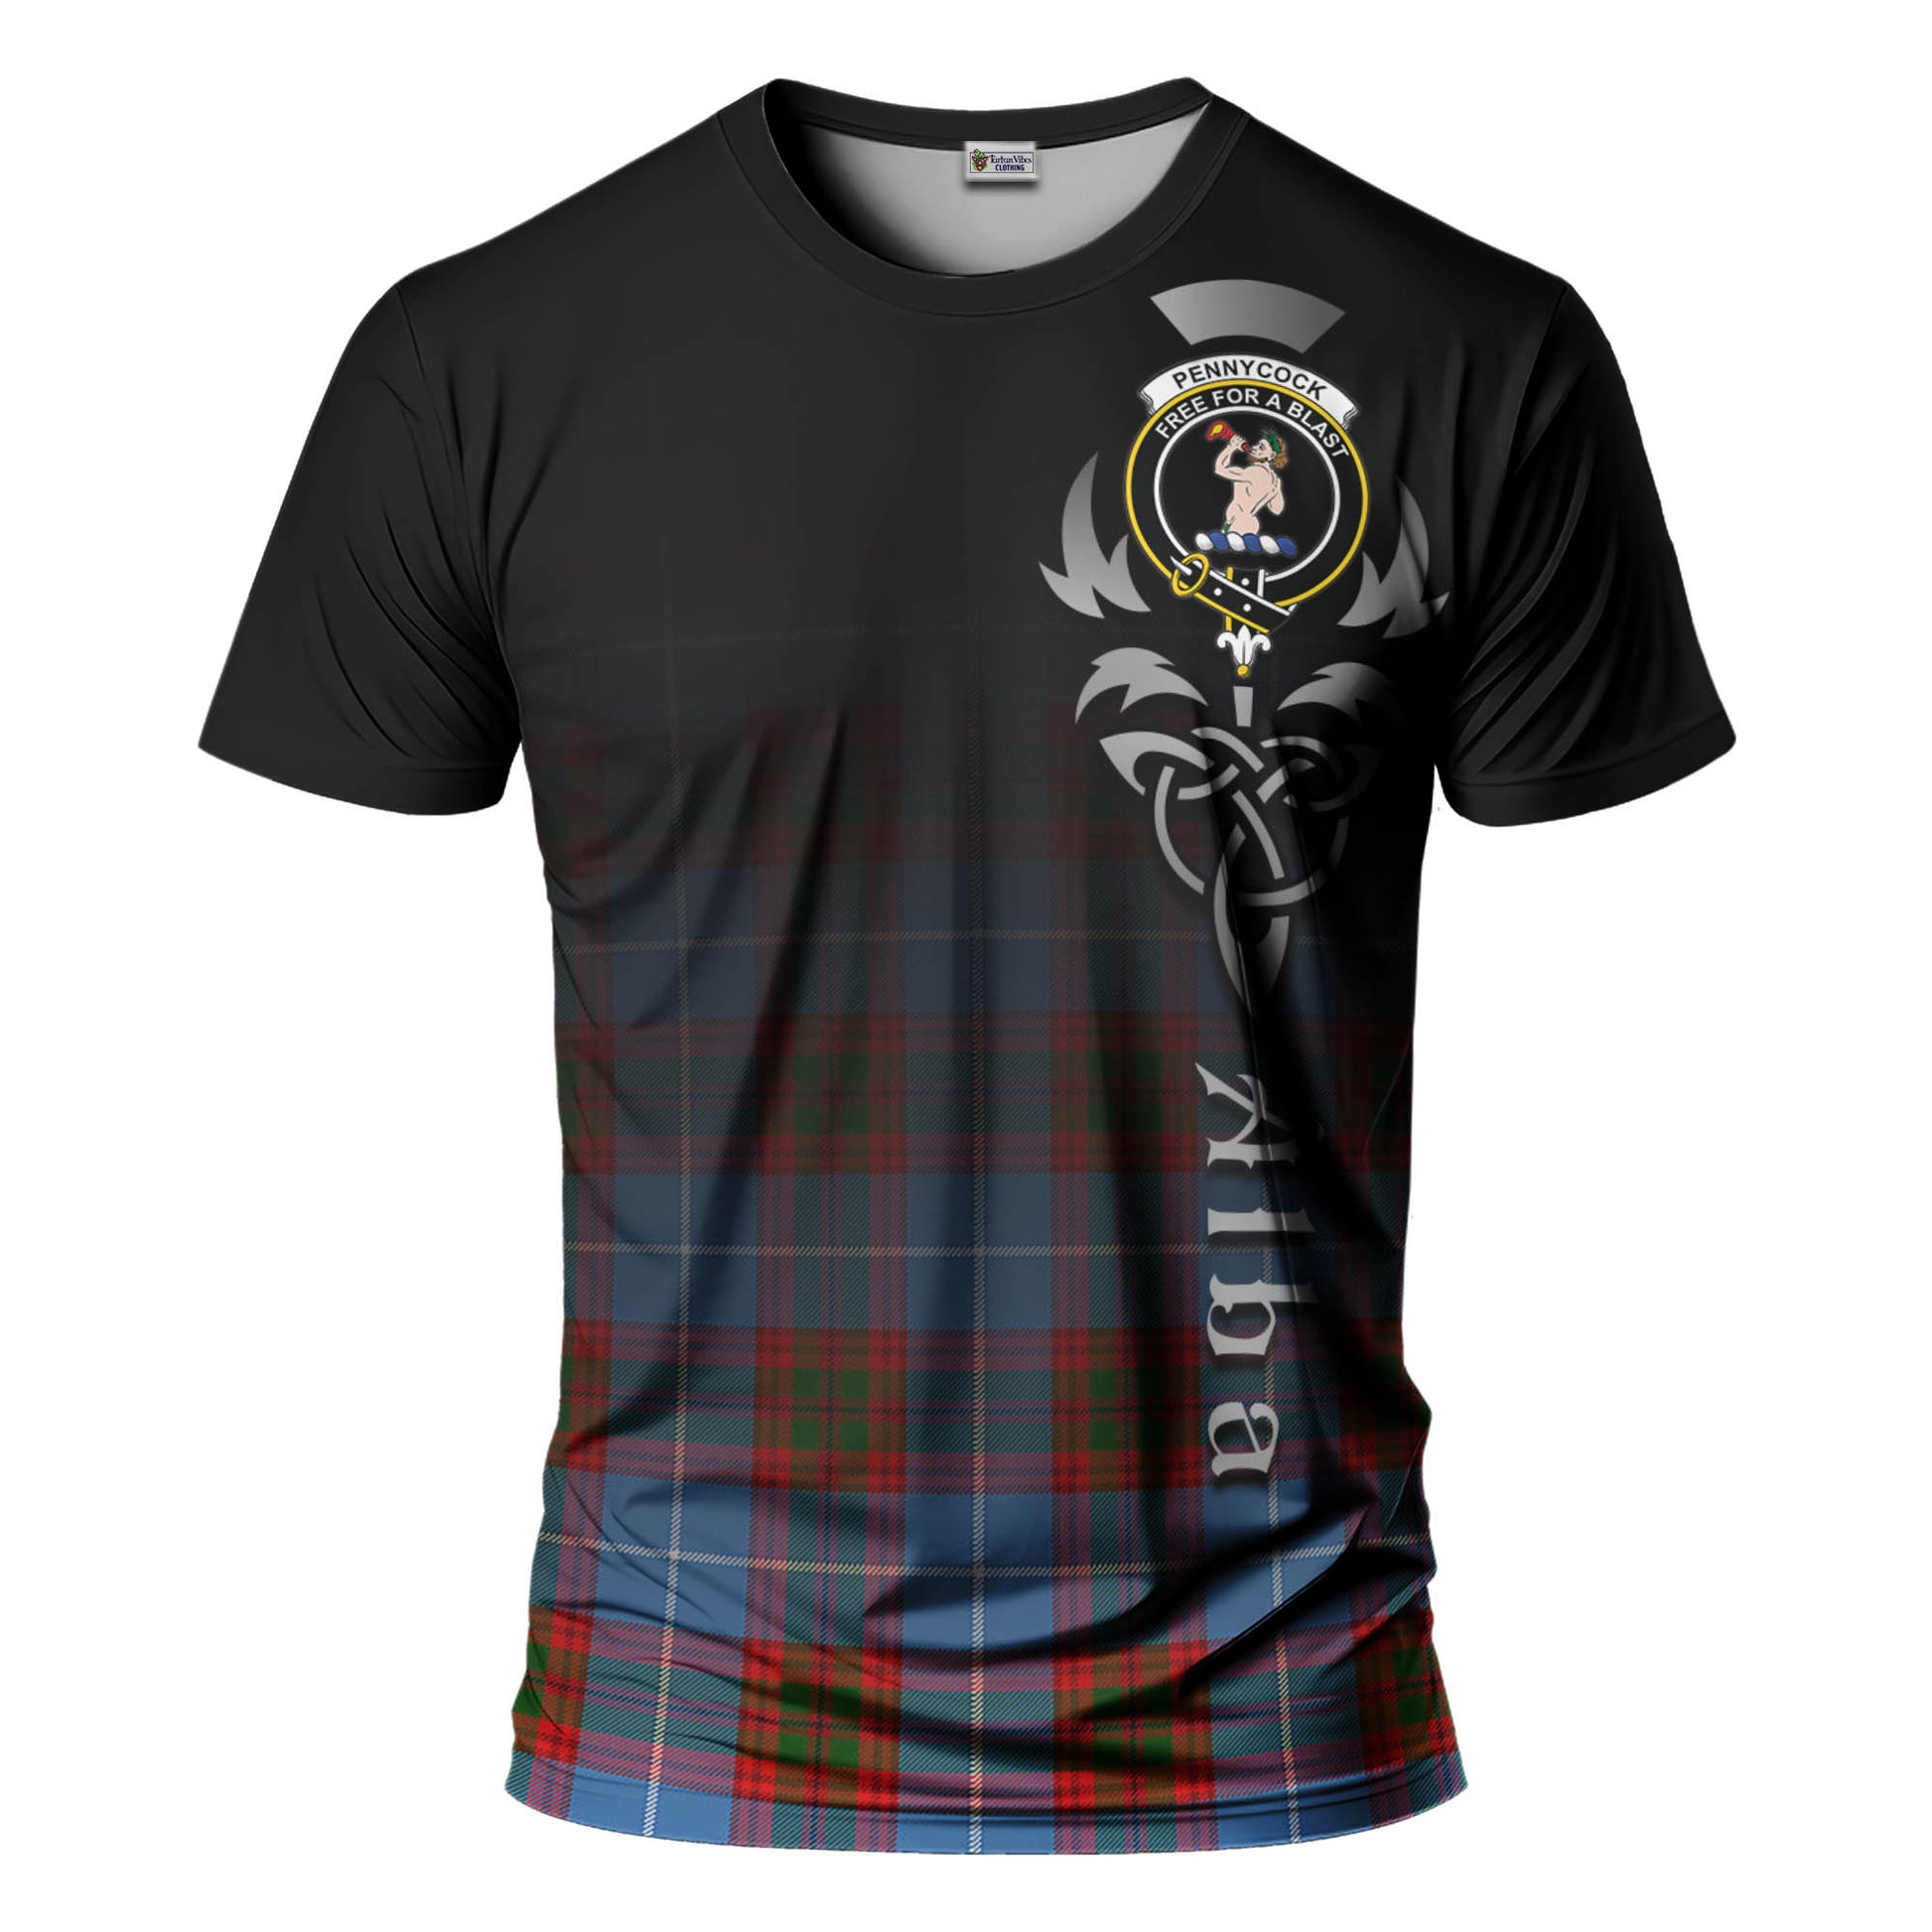 Tartan Vibes Clothing Pennycook Tartan T-Shirt Featuring Alba Gu Brath Family Crest Celtic Inspired